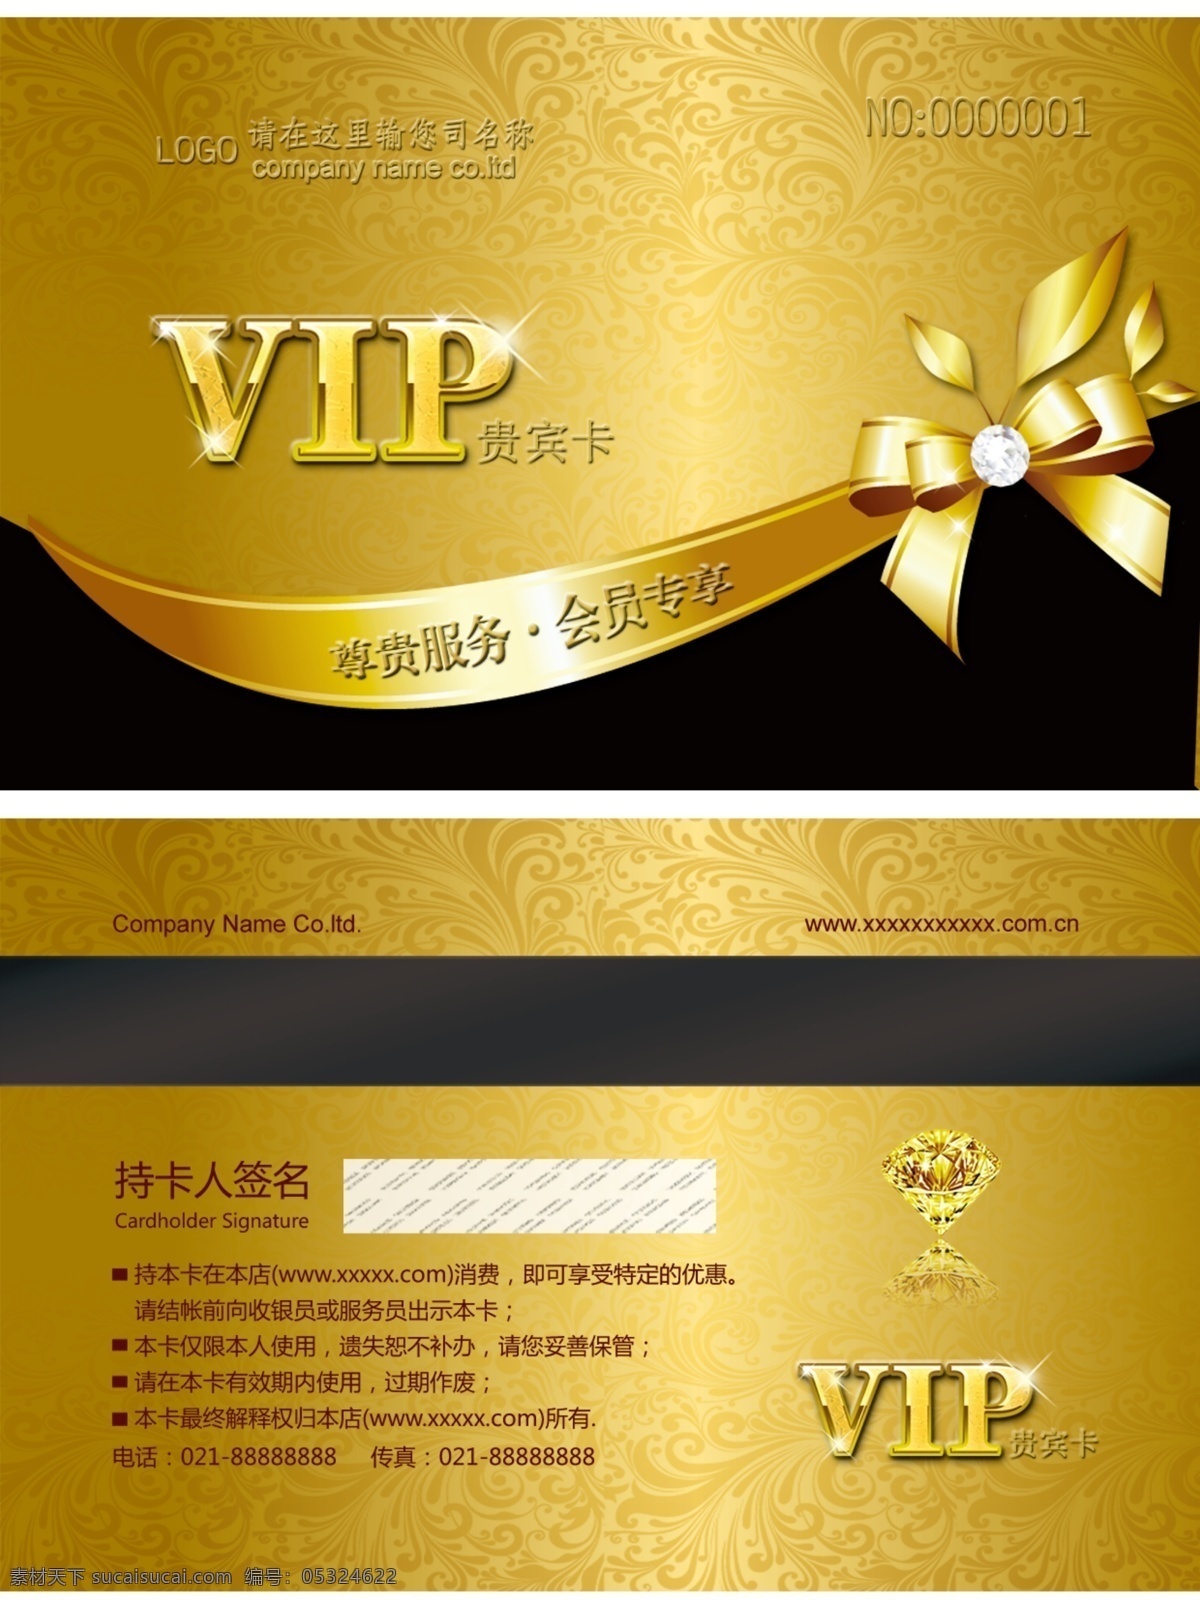 vip金卡 金卡 vip 模板 贵宾 会员 ktv会员卡 制作 印刷 银行 会所 娱乐 珠宝 质感 金色 奢华 高档vip卡 名片卡片